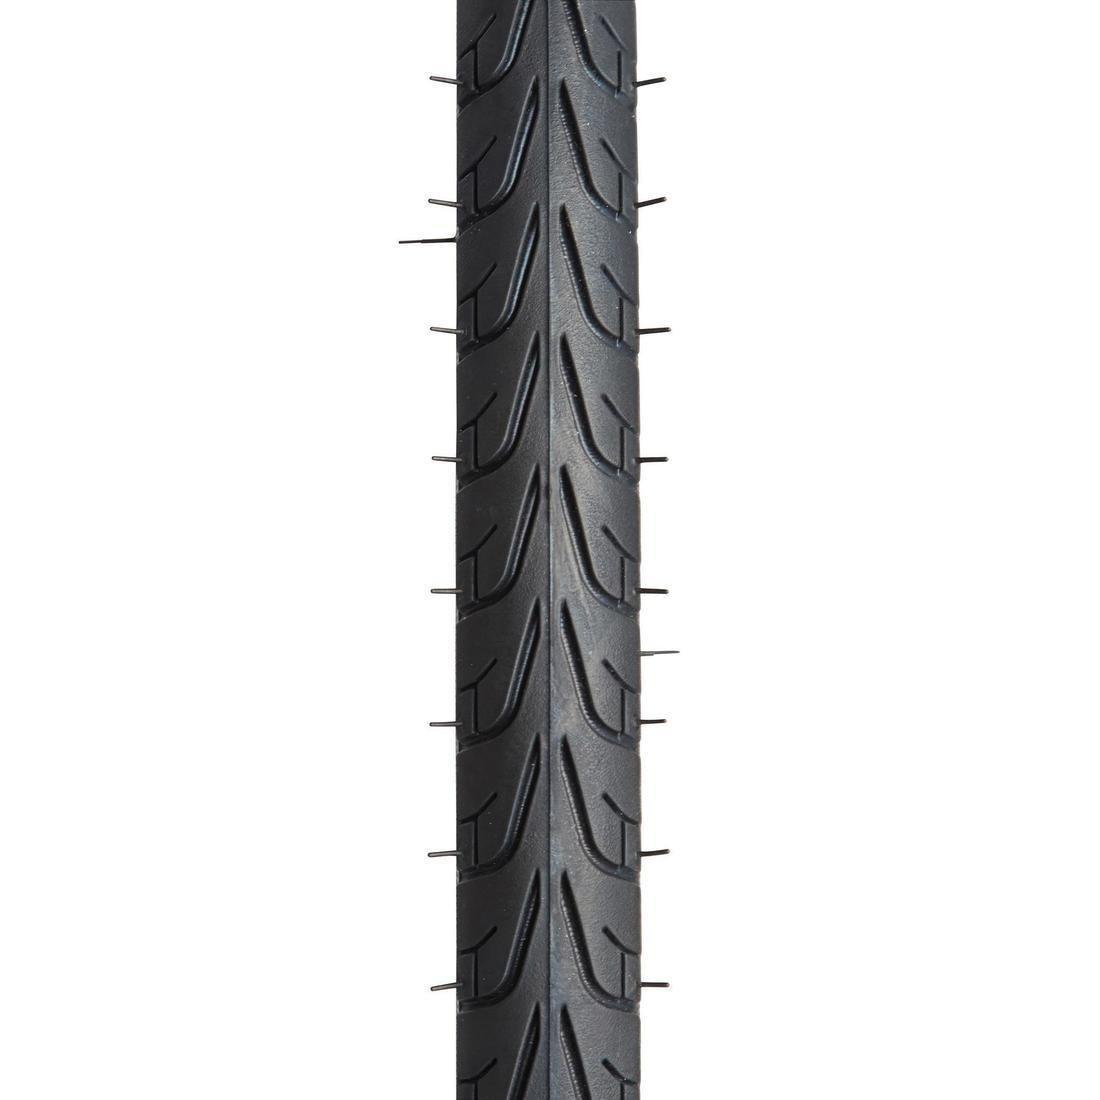 VITTORIA - Randonneur Road Bike Tyre, Black